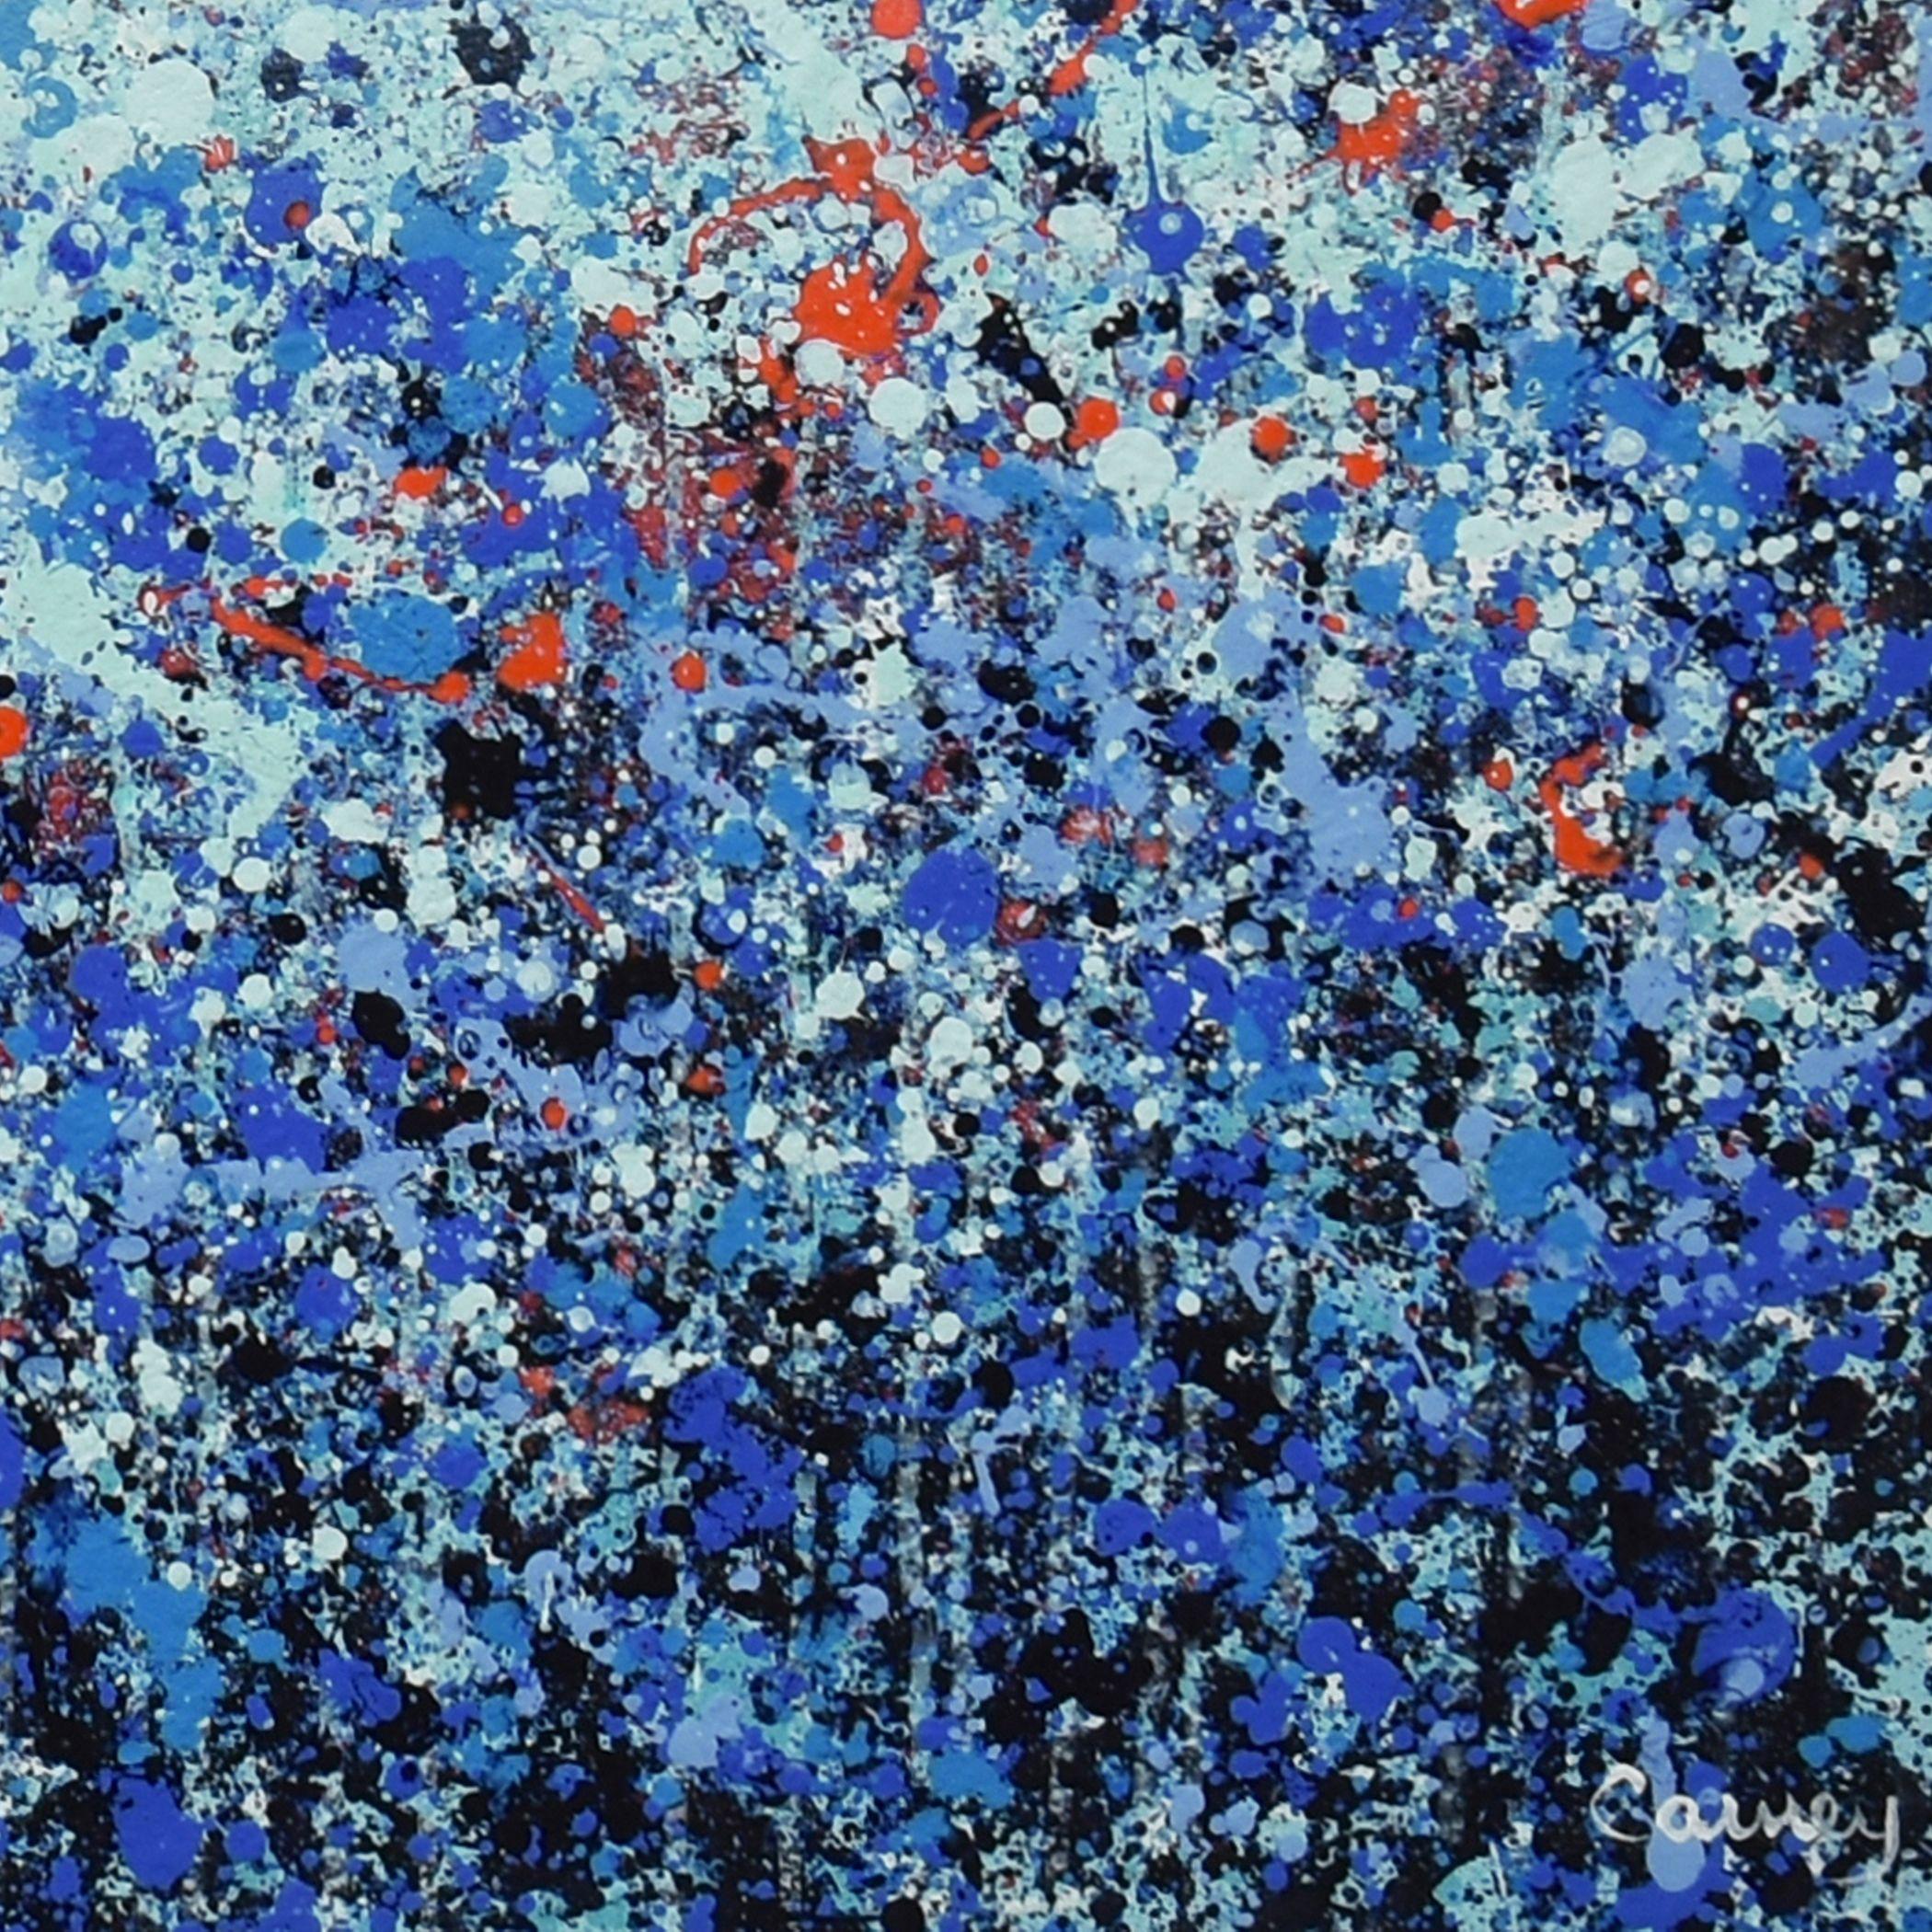 â€œJardin Bleuâ€ is a large-scale abstract painting in acrylic on canvas. It was created in beautiful shades of blue, turquoise and red. It is from the 